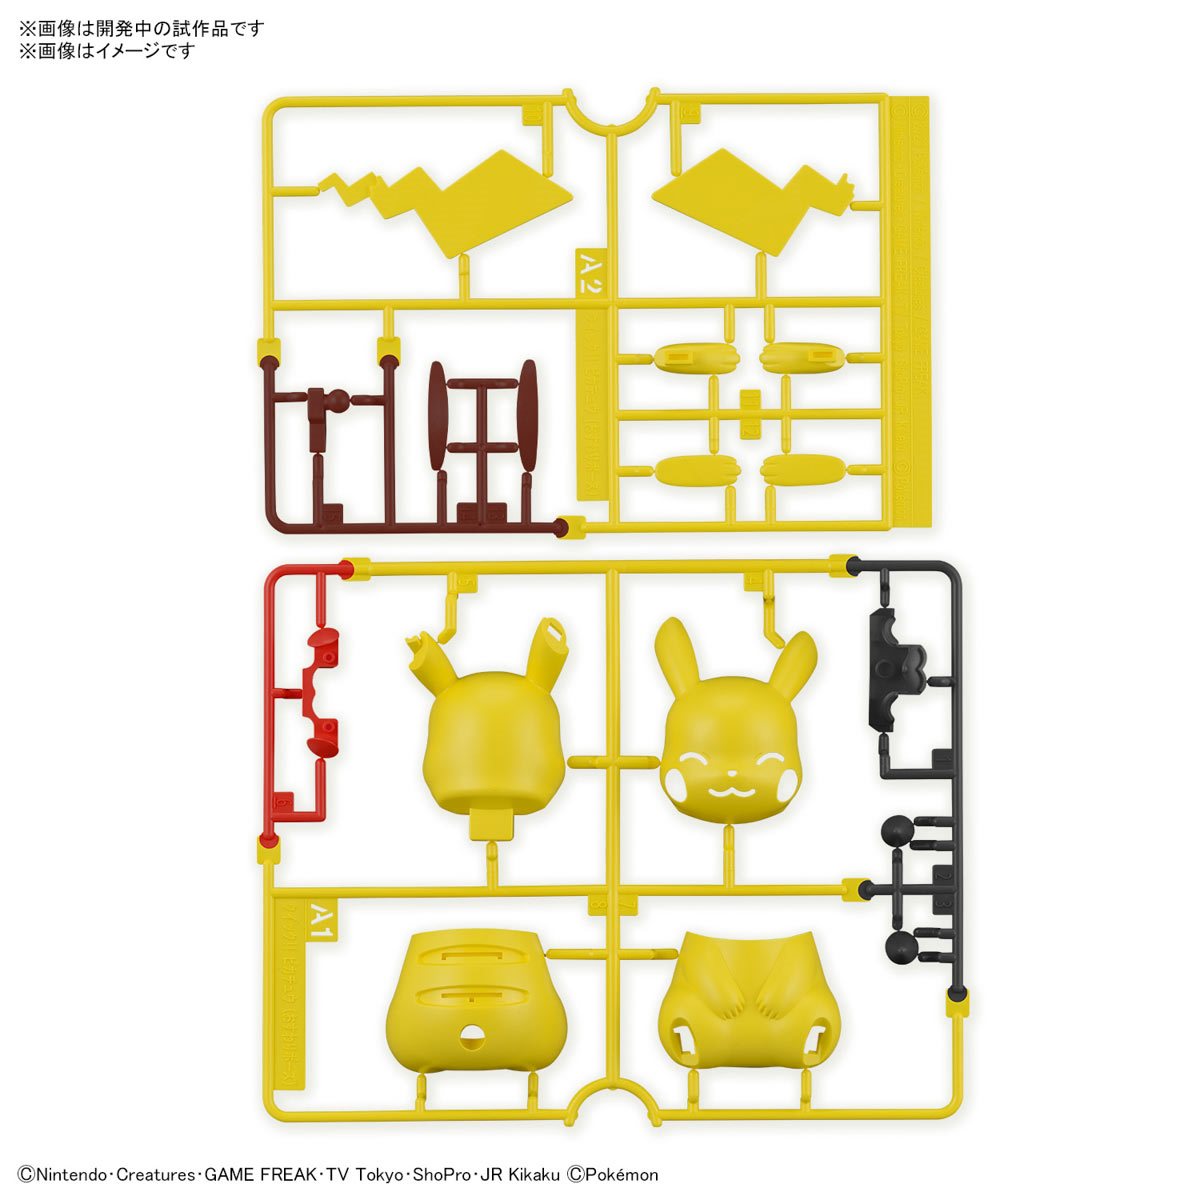 Bandai Hobby Gunpla Quick Model Kit: Pokemon - Pikachu Sentado